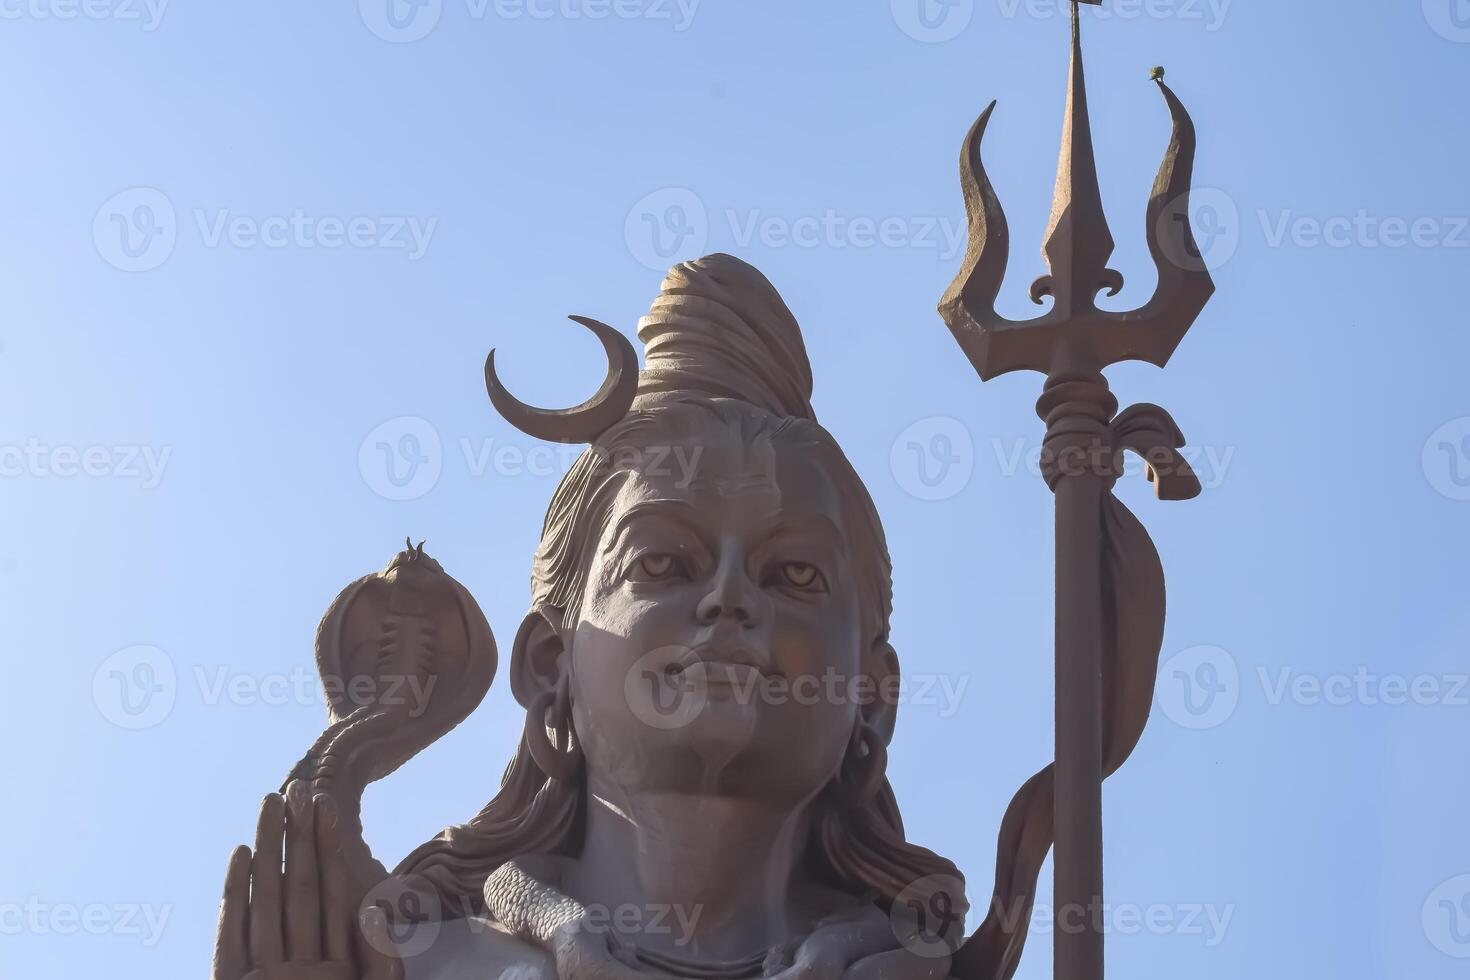 Big statue of Lord Shiva near Delhi International airport, Delhi, India, Lord Shiv big statue touching sky at main highway Mahipalpur, Delhi photo